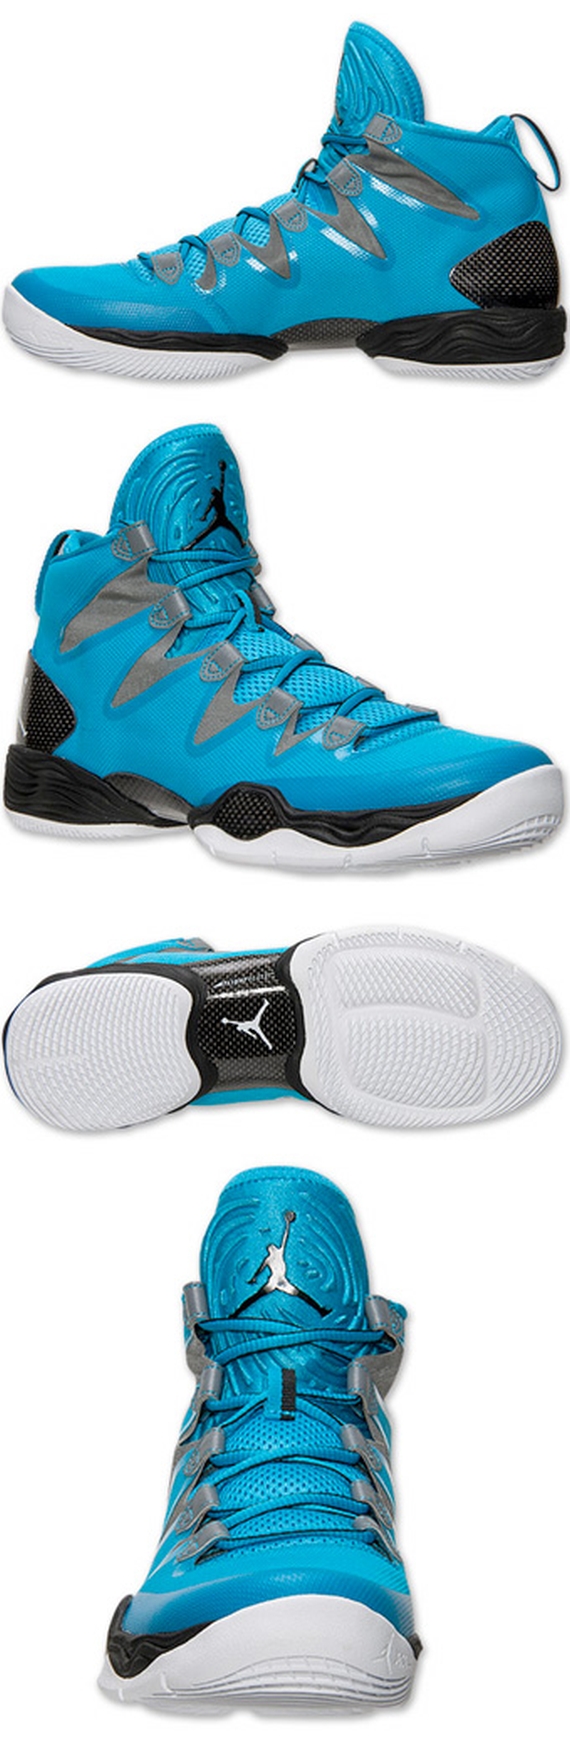 Air Jordan Xx8 Se Dark Powder Blue Release Date 01